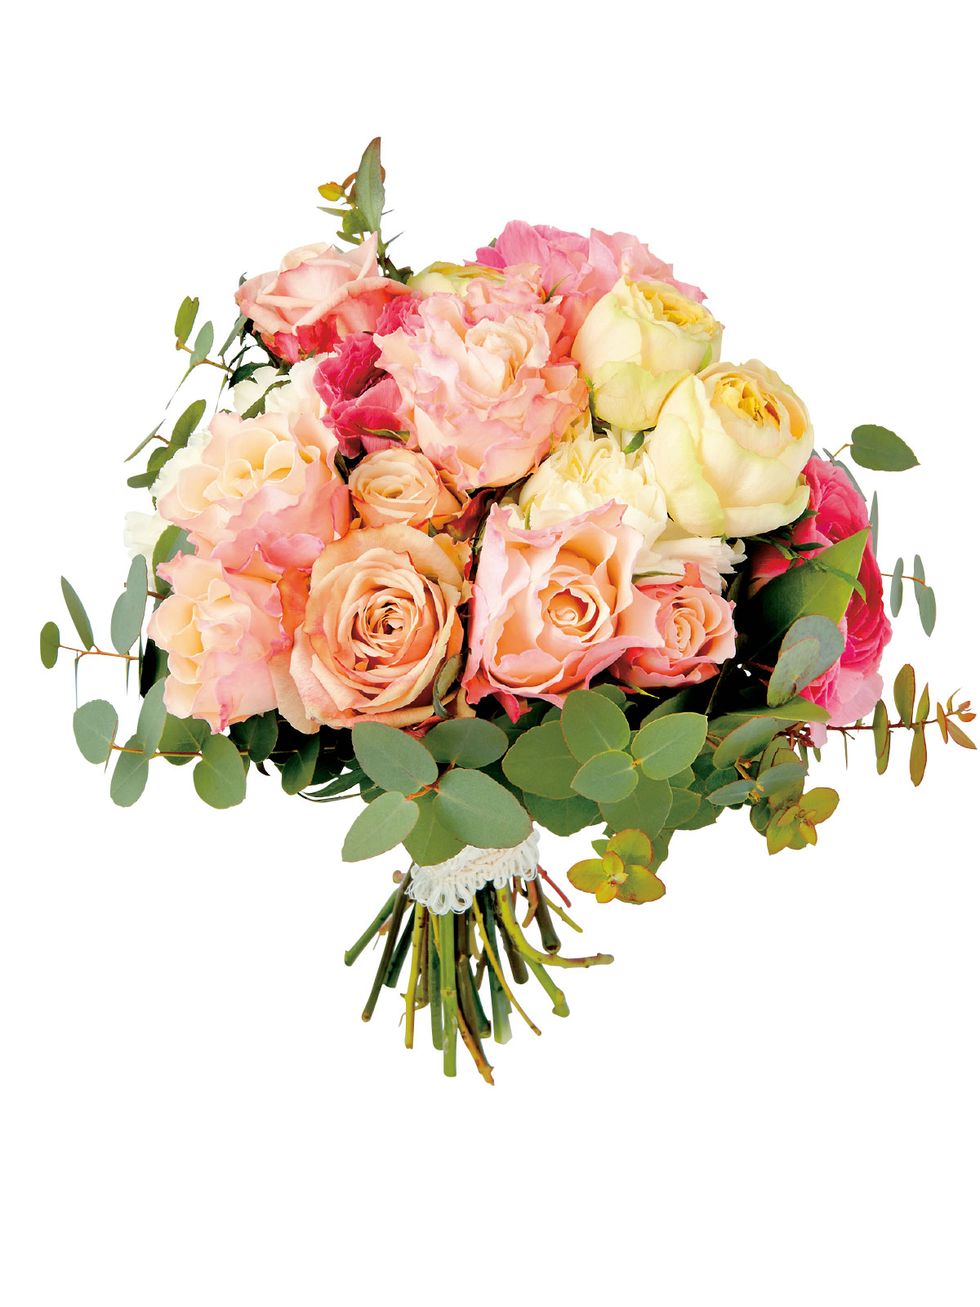 Petal, Flower, Pink, Bouquet, Cut flowers, Flowering plant, Rose family, Botany, Flower Arranging, Peach, 